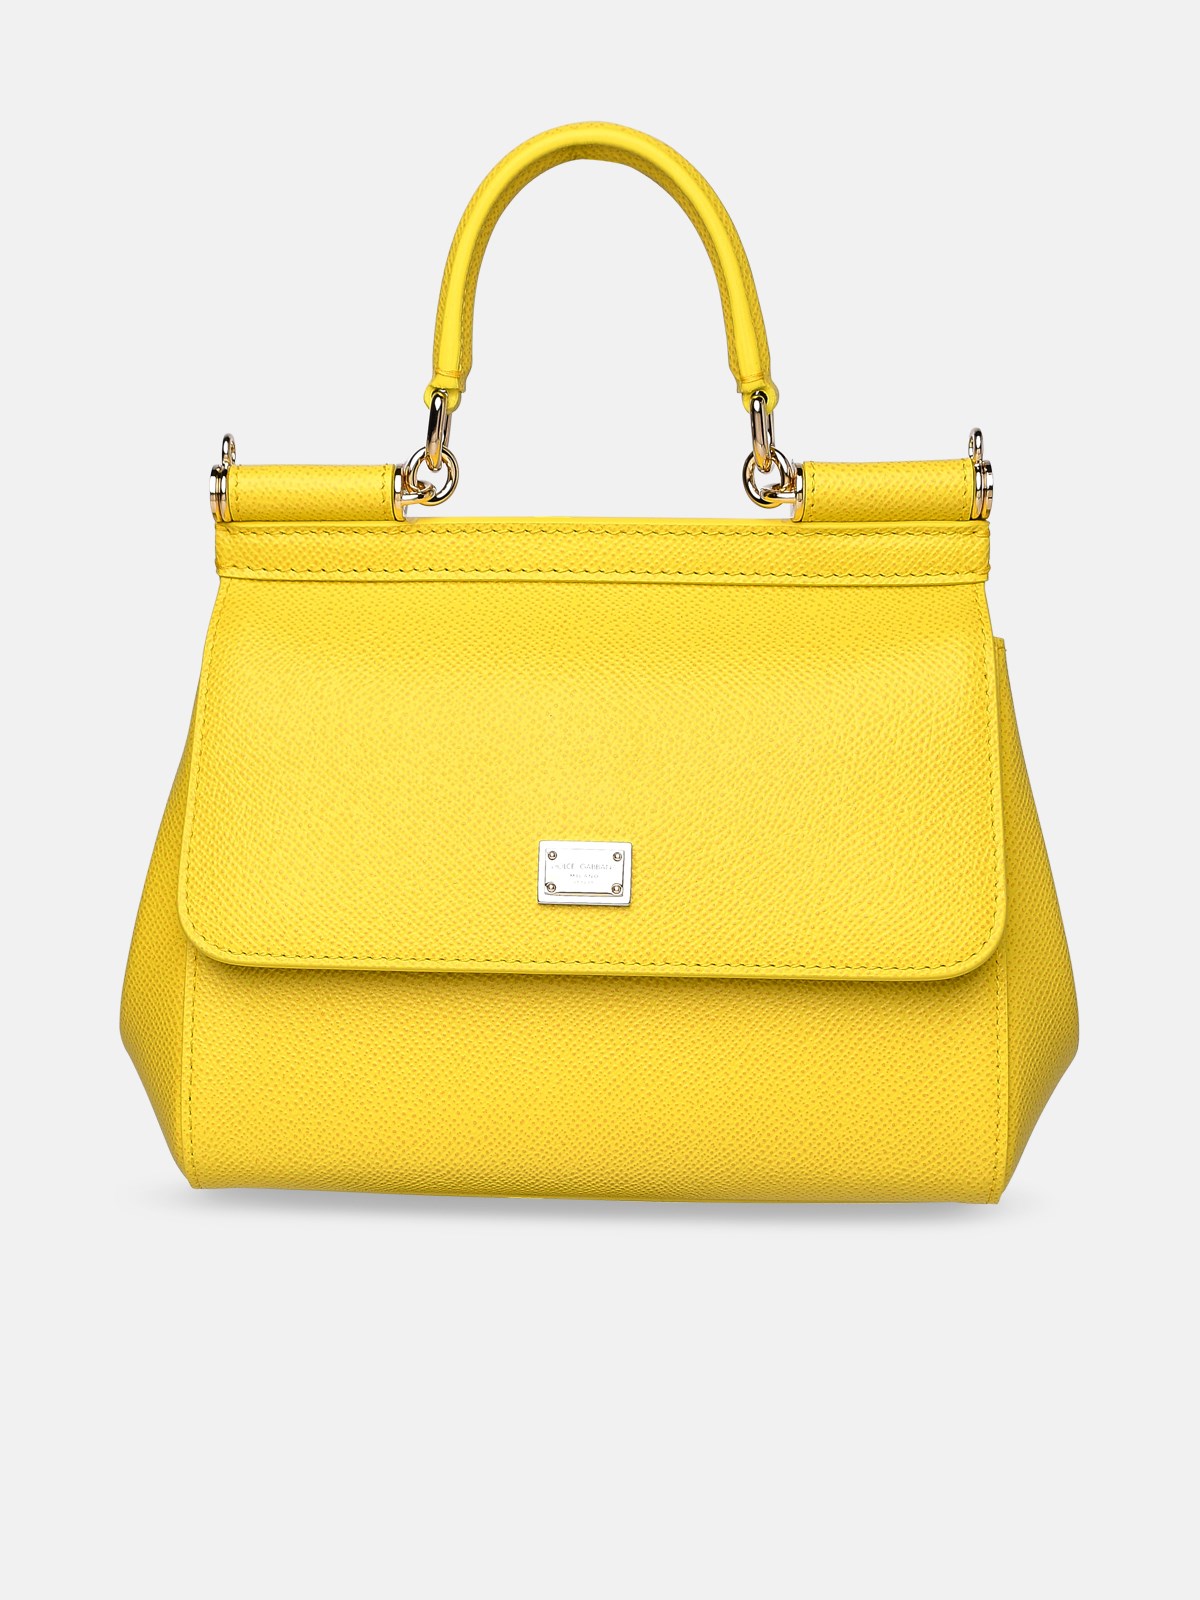 Dolce & Gabbana Yellow Leather Bag